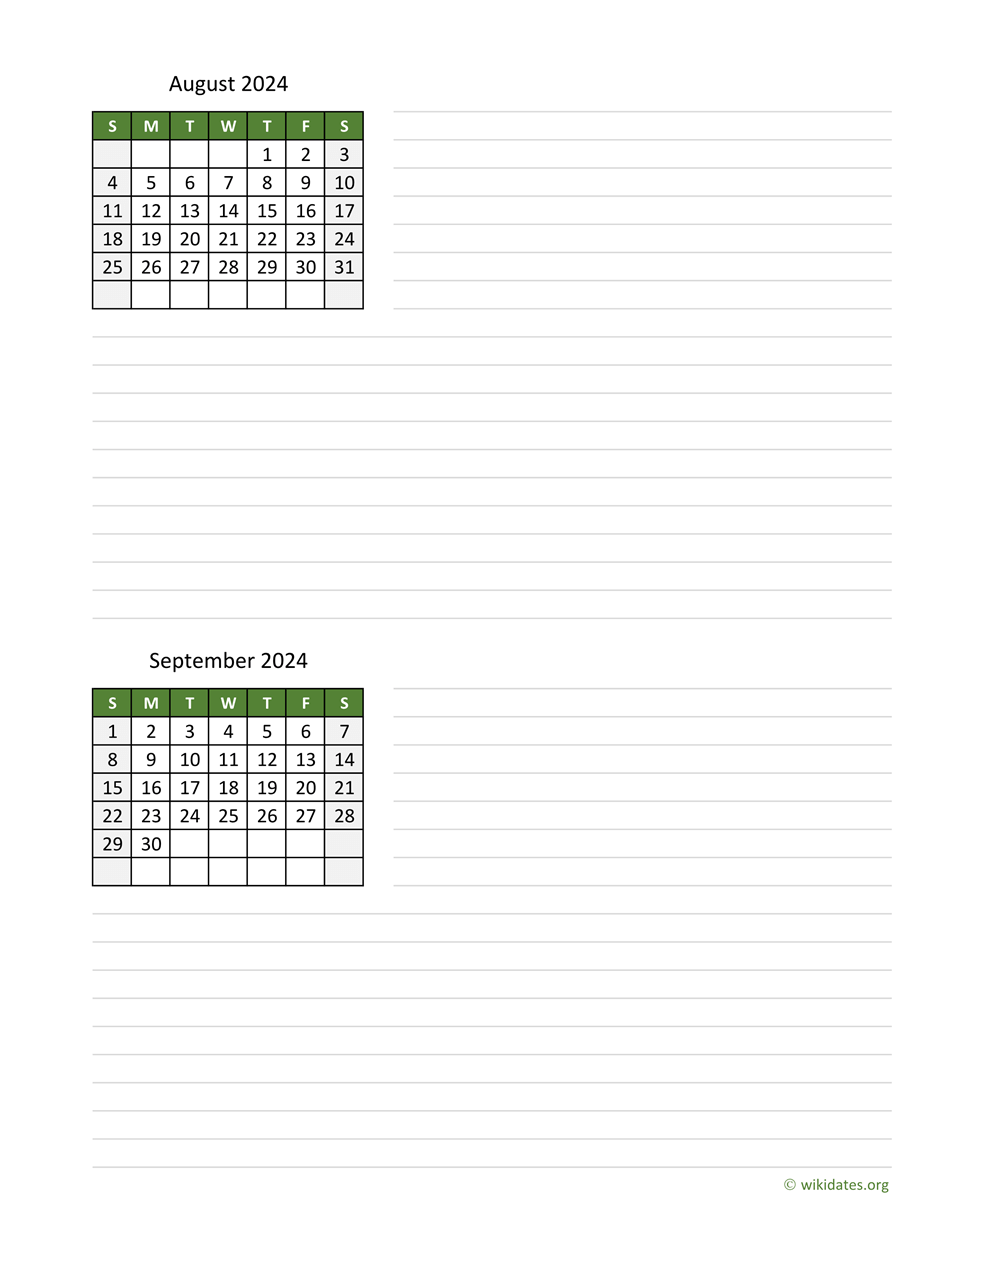 August and September 2024 Calendar | WikiDates.org